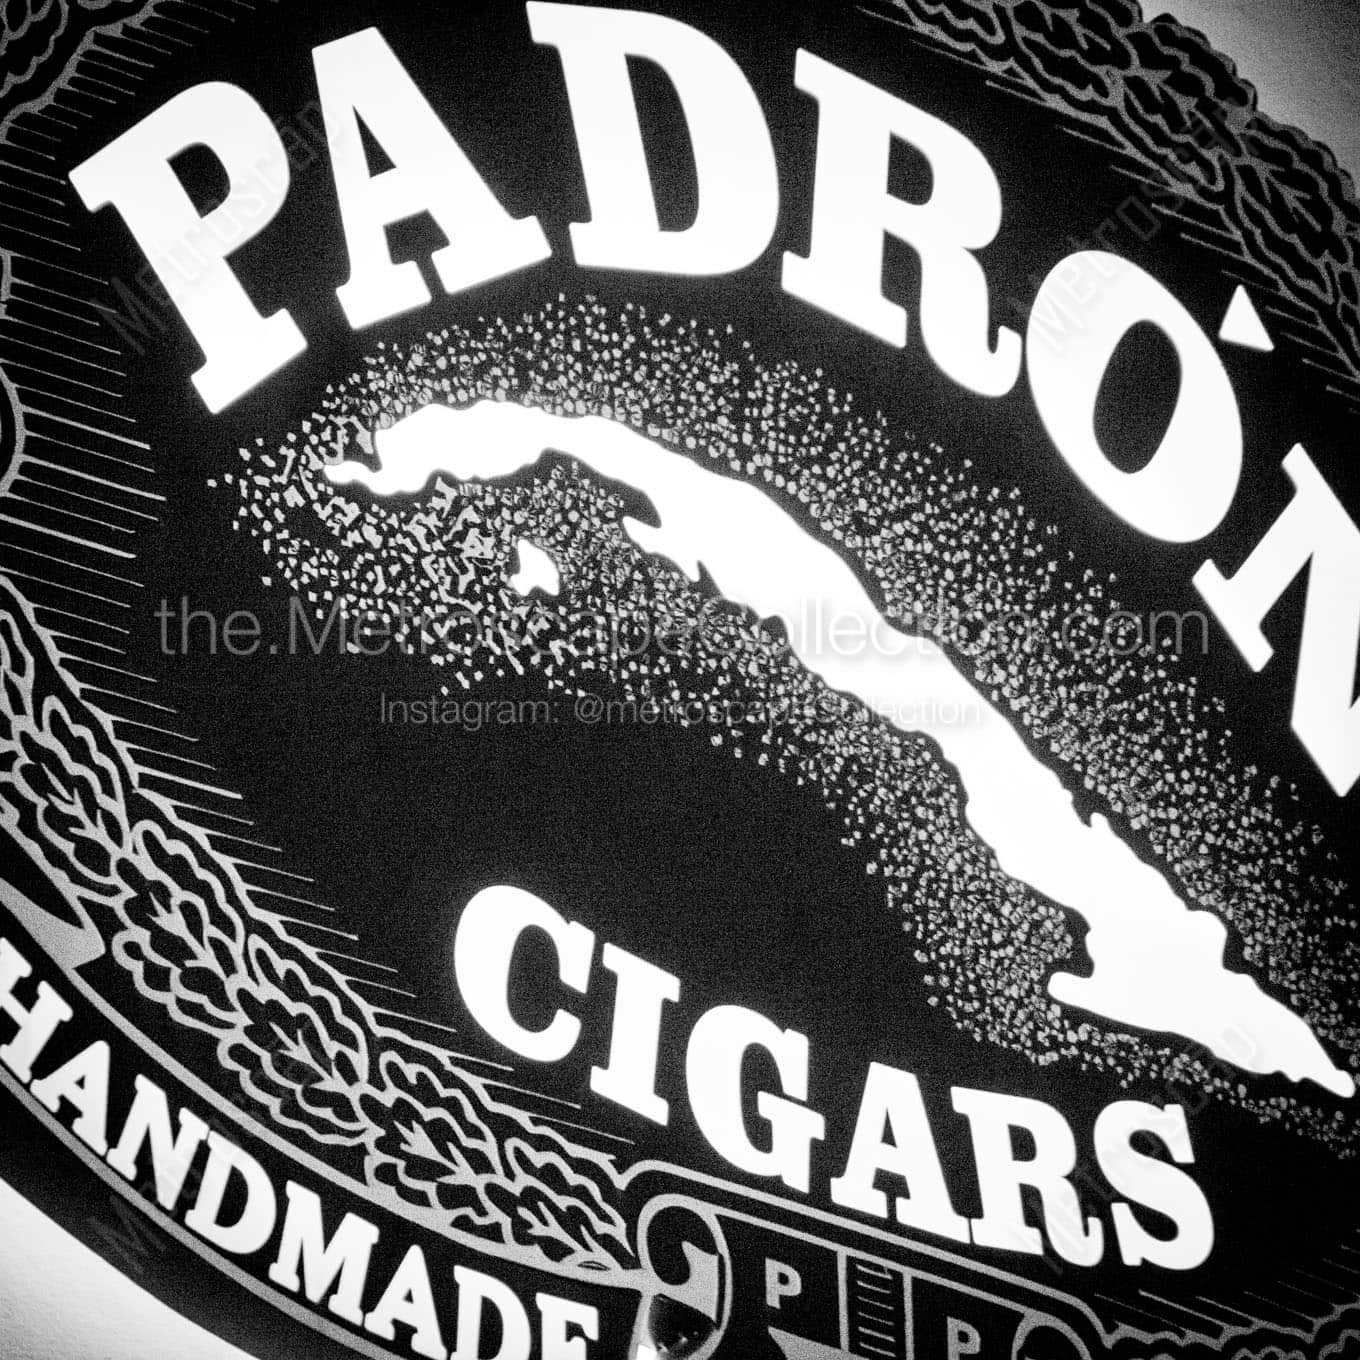 padron handmade cigars Black & White Office Art